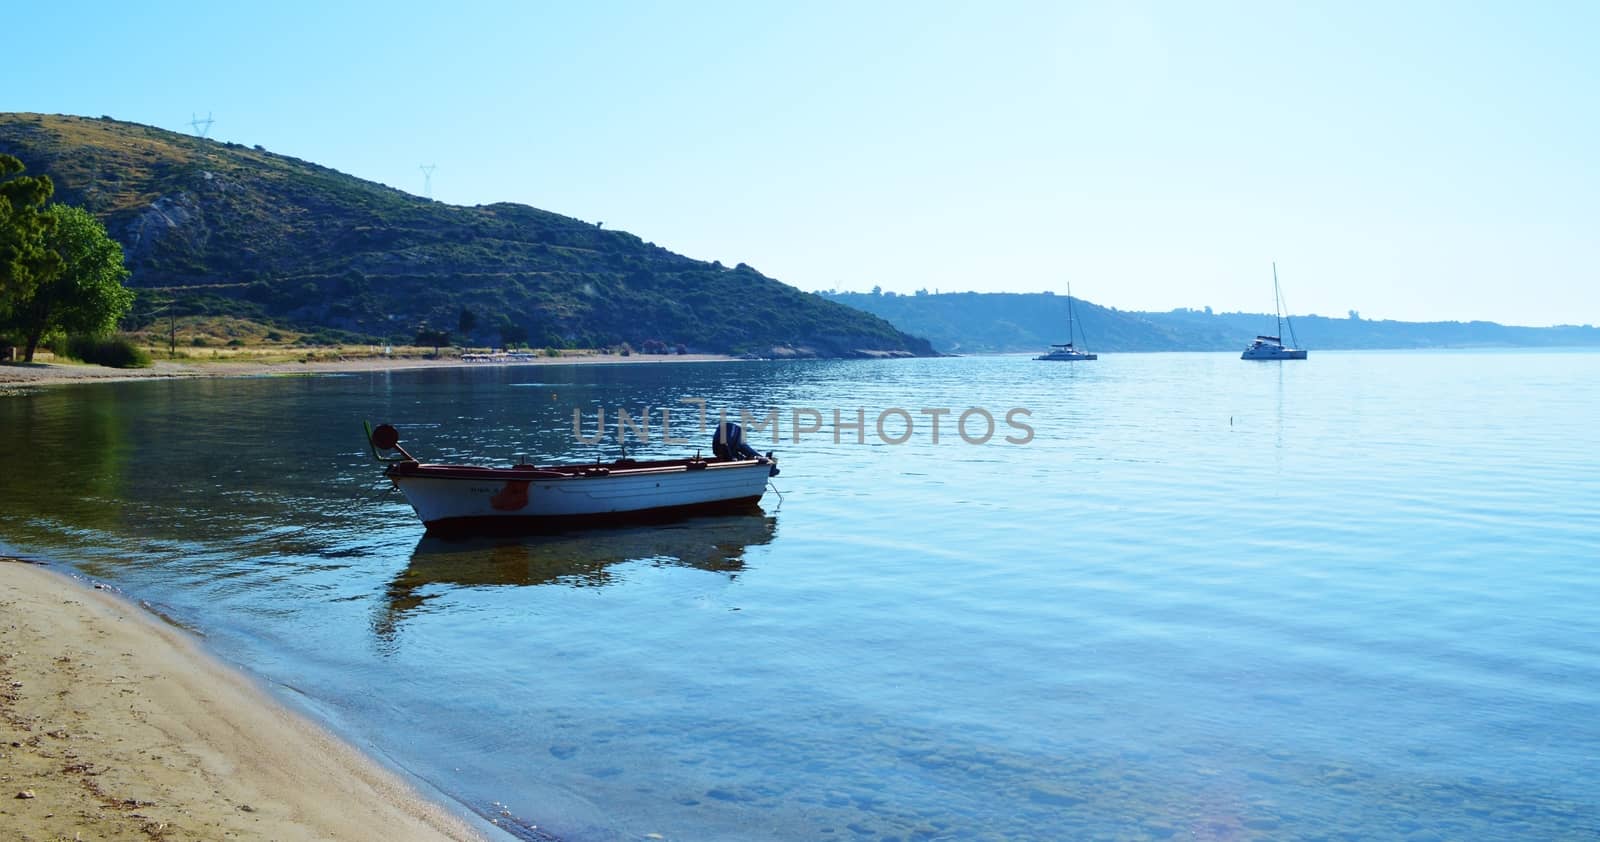 A peaceful coastal image taken close to Katelios on the beautiful Greek Island of Kefalonia.